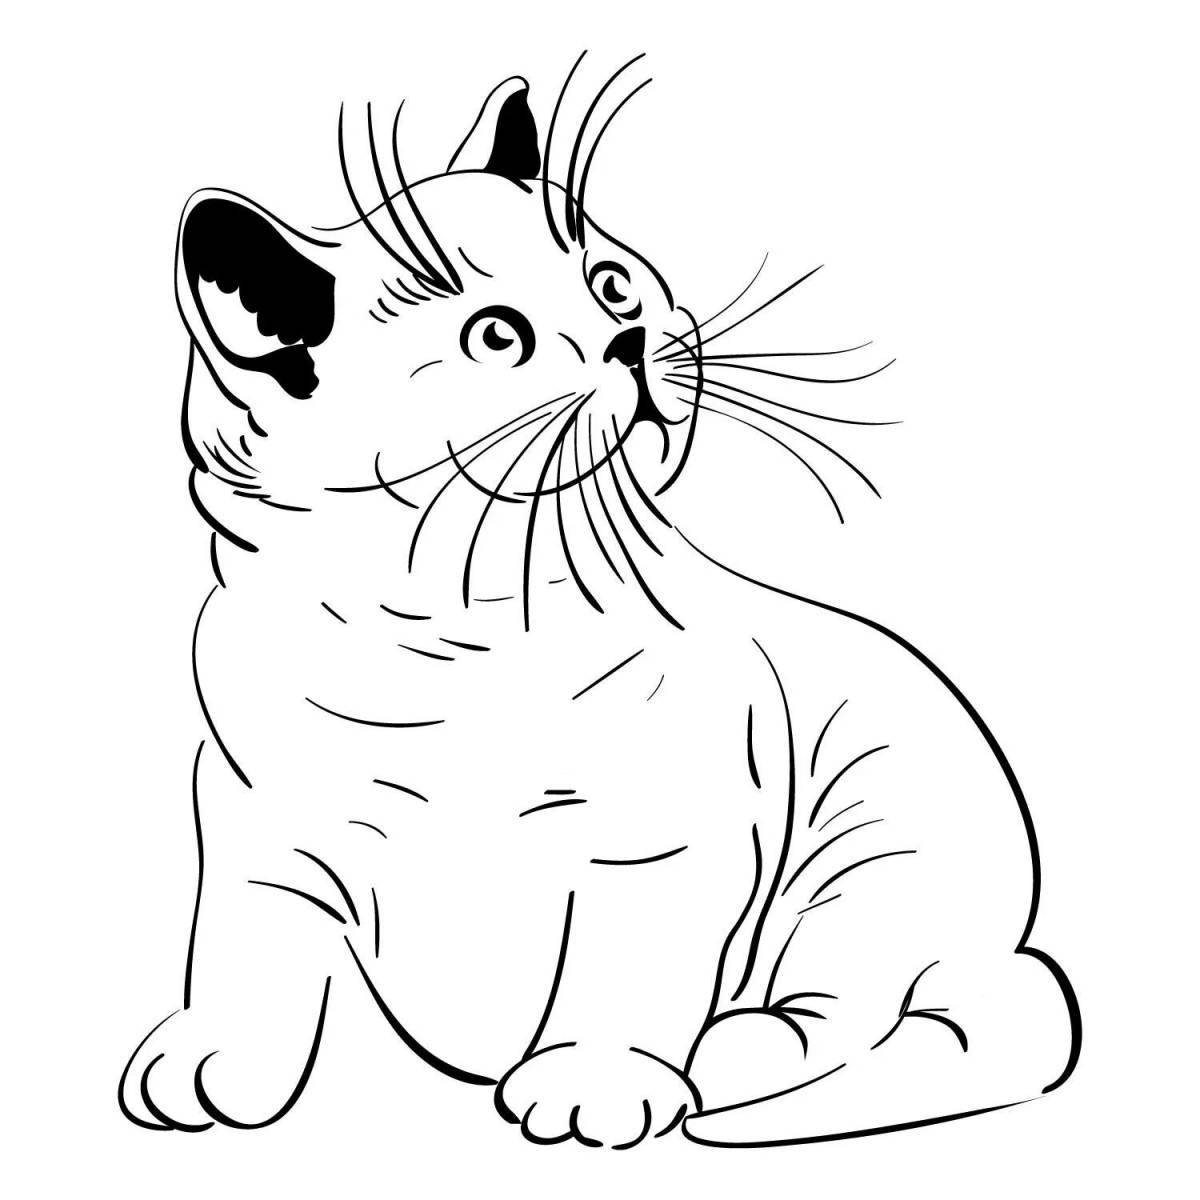 Coloring book funny british shorthair cat